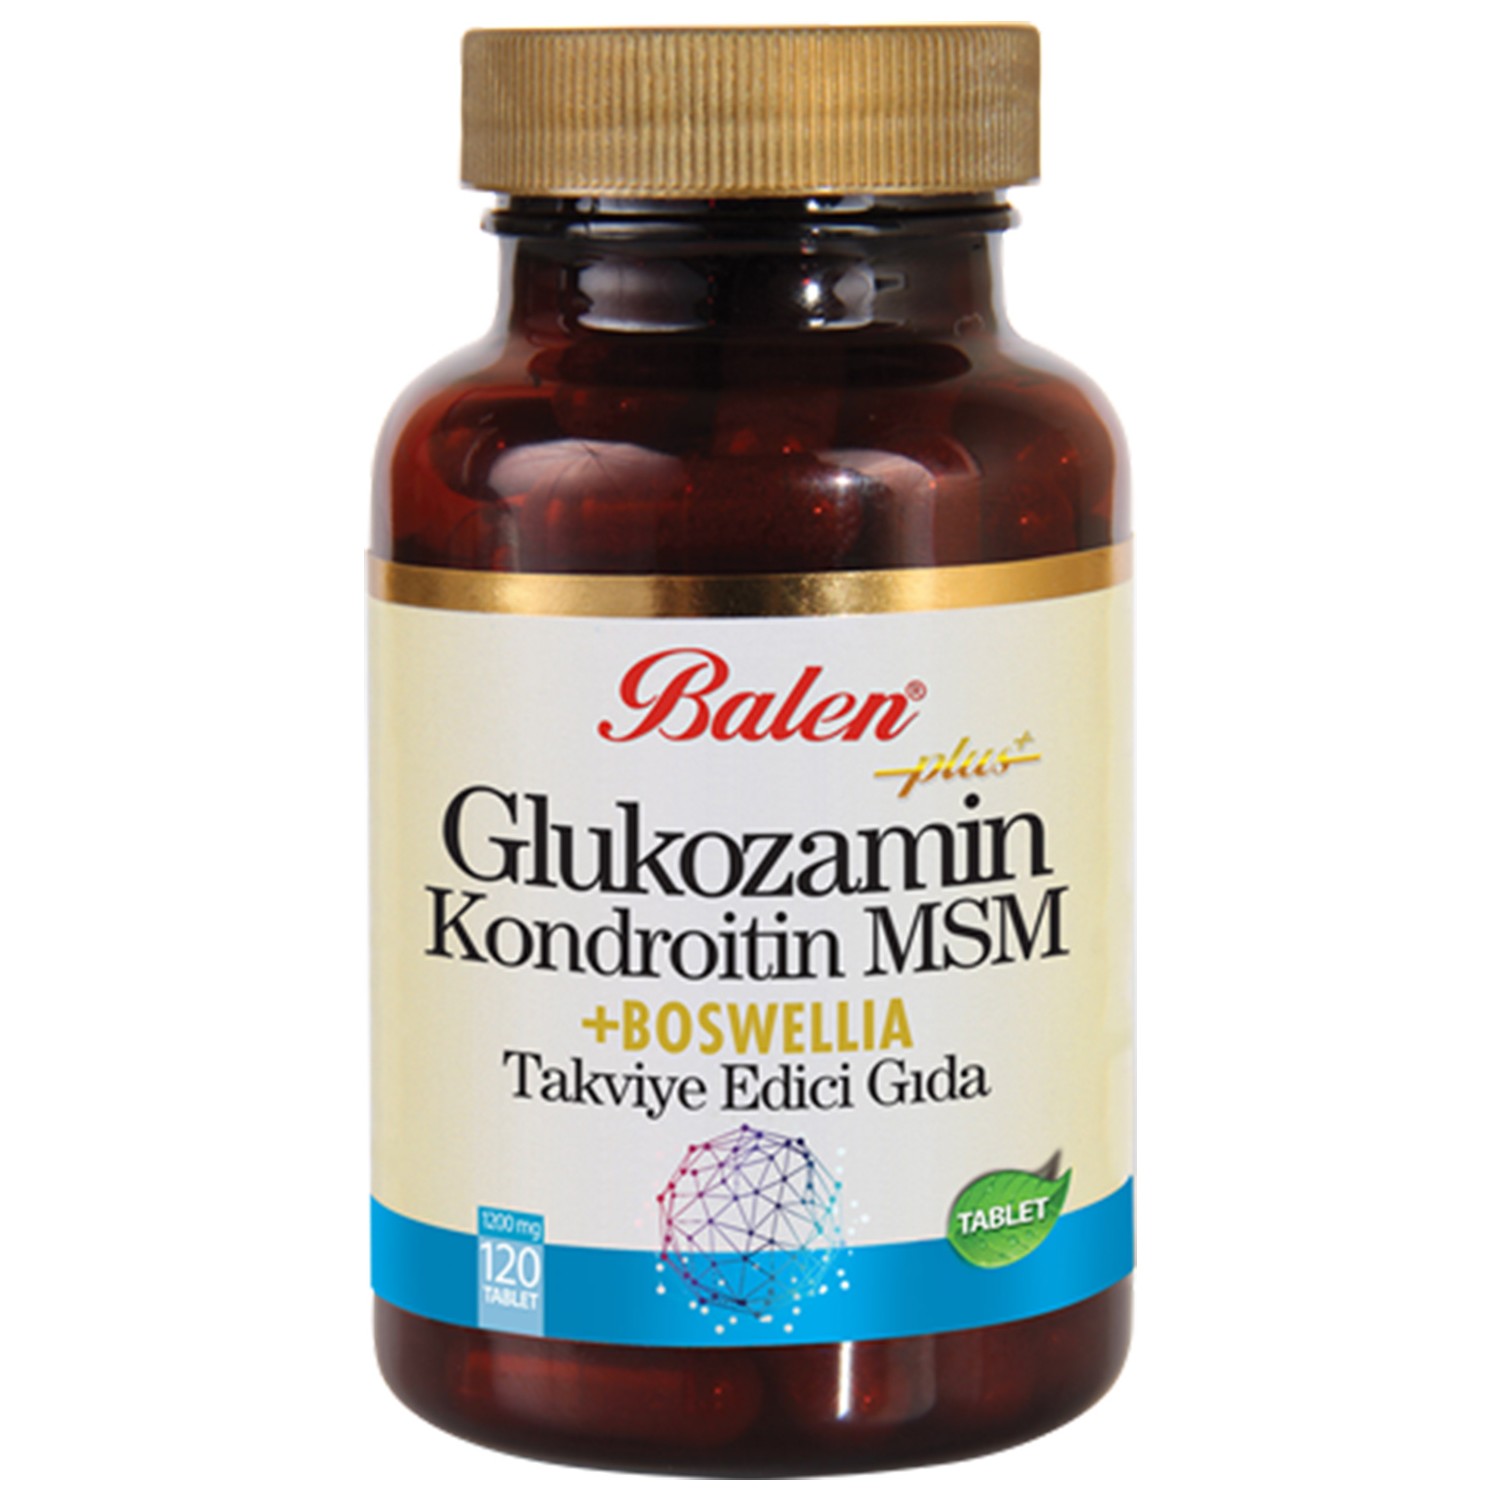 Активная добавка глюкозамин Balen Chondroitin Msm и Boswellia, 120 капсул, 1200 мг nature s way flexmax глюкозамин и хондроитин 80 таблеток